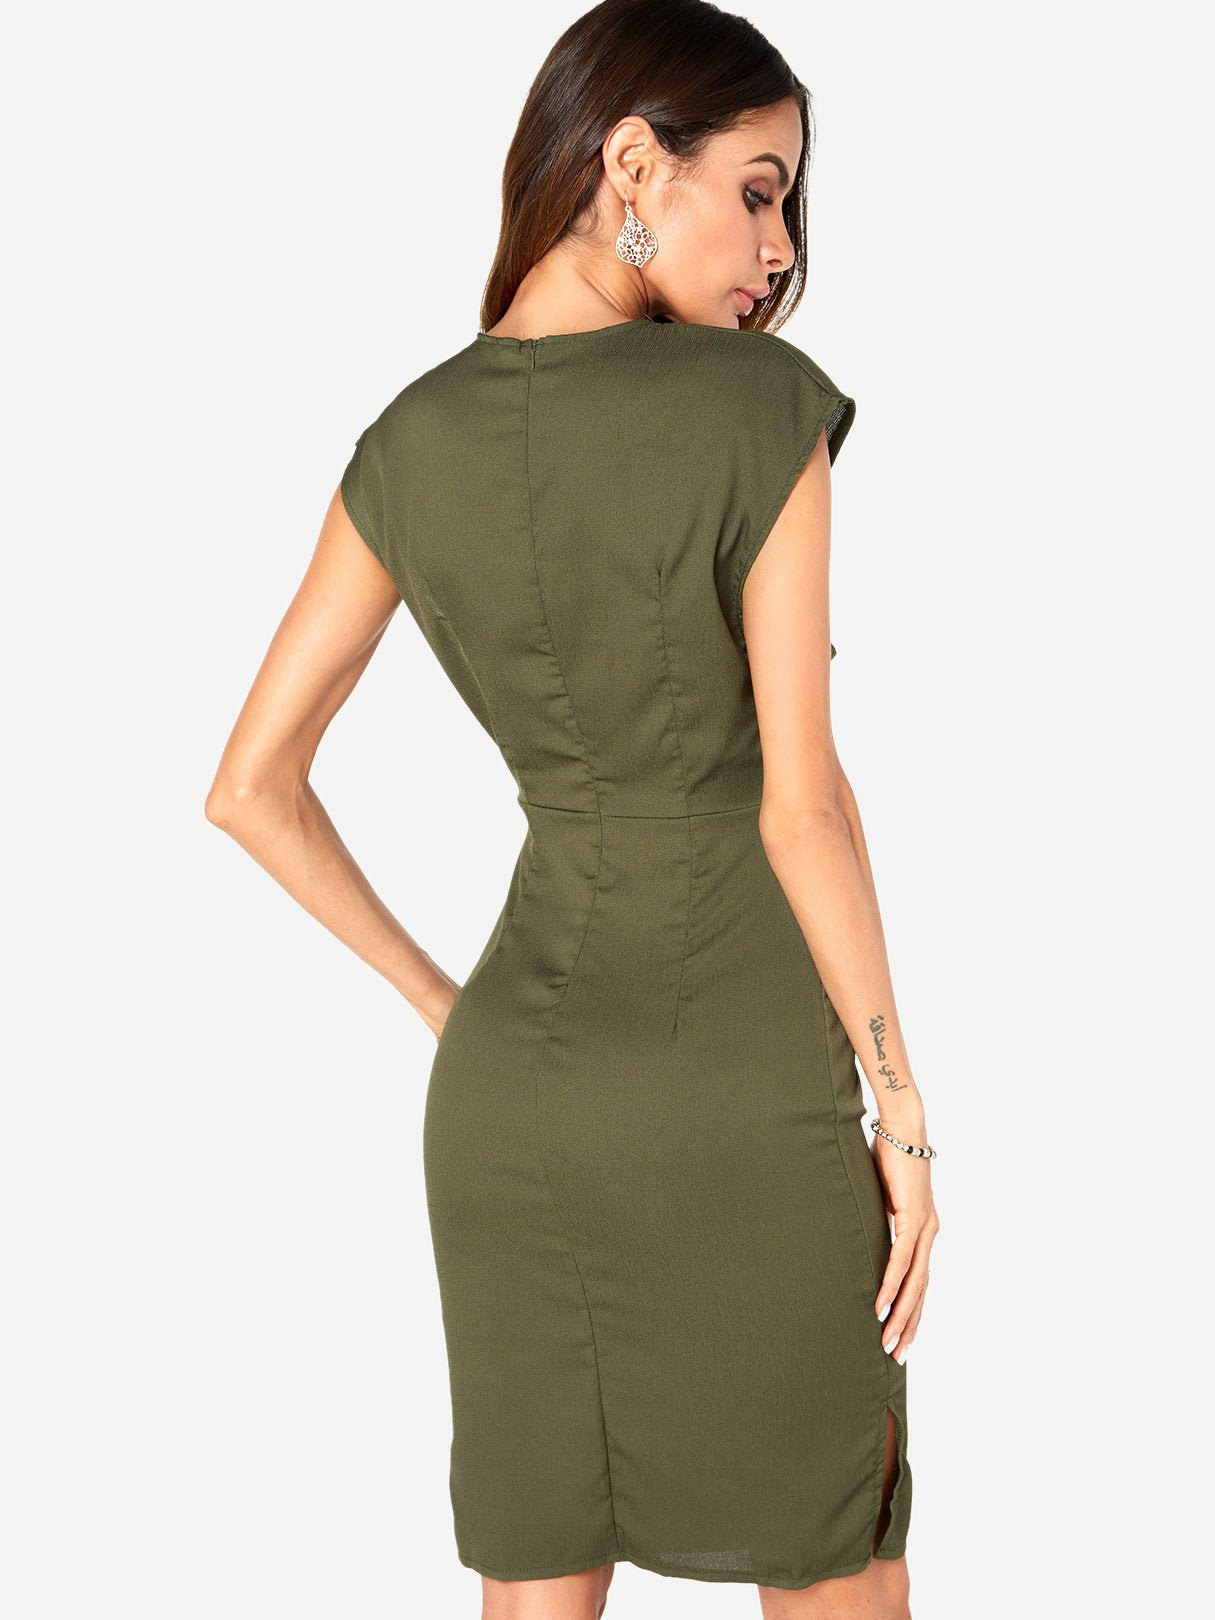 NEW FEELING Womens Army Green V-Neck Dresses